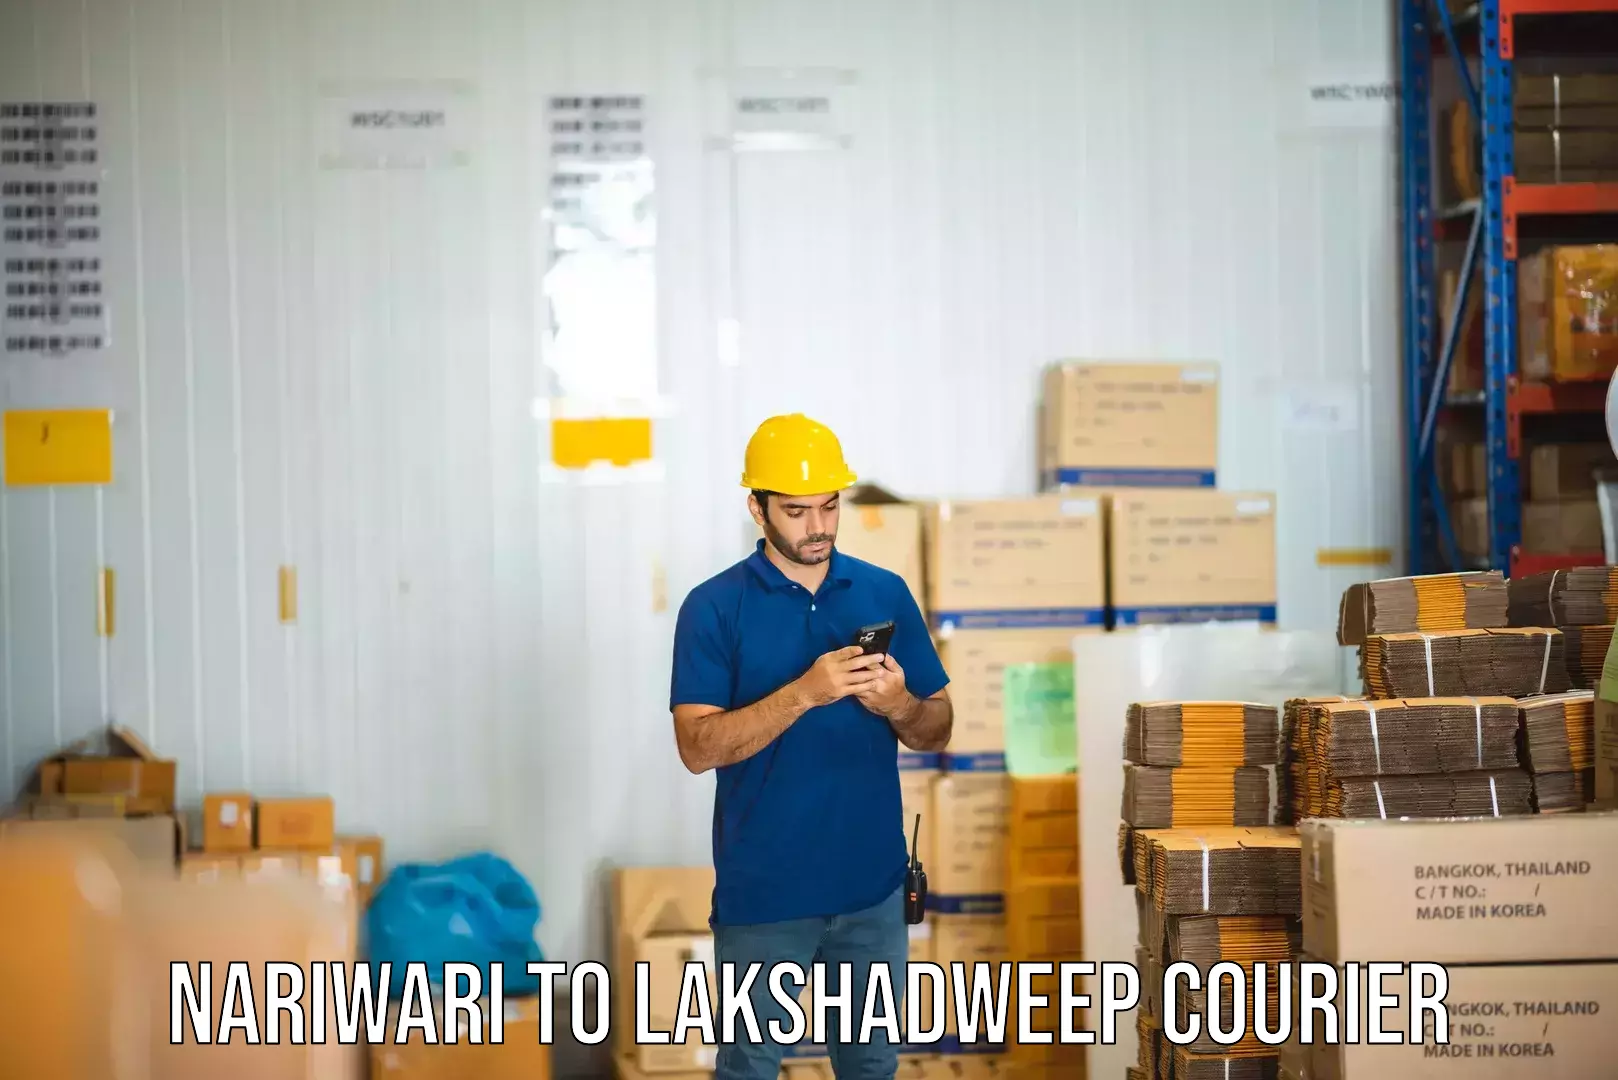 Global courier networks Nariwari to Lakshadweep